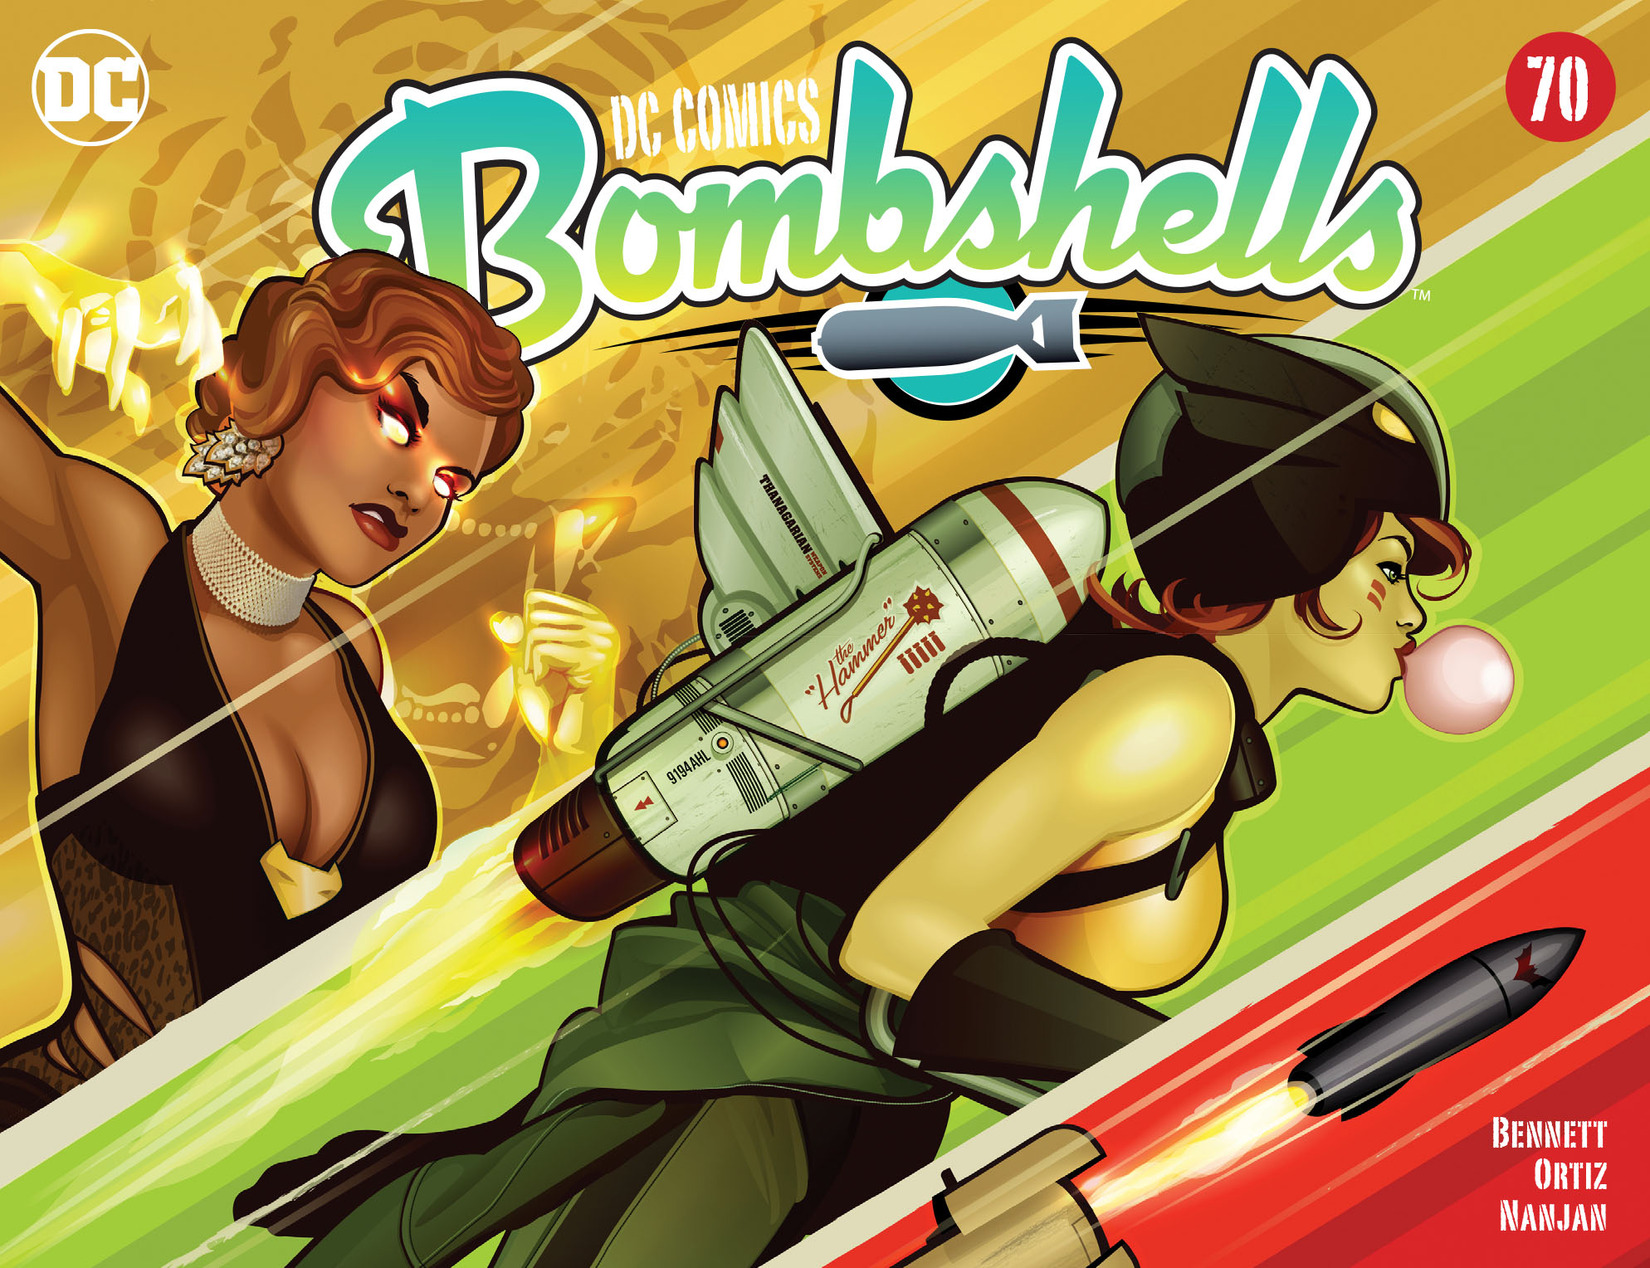 DC Comics - Bombshells (2015-): Chapter 70 - Page 1